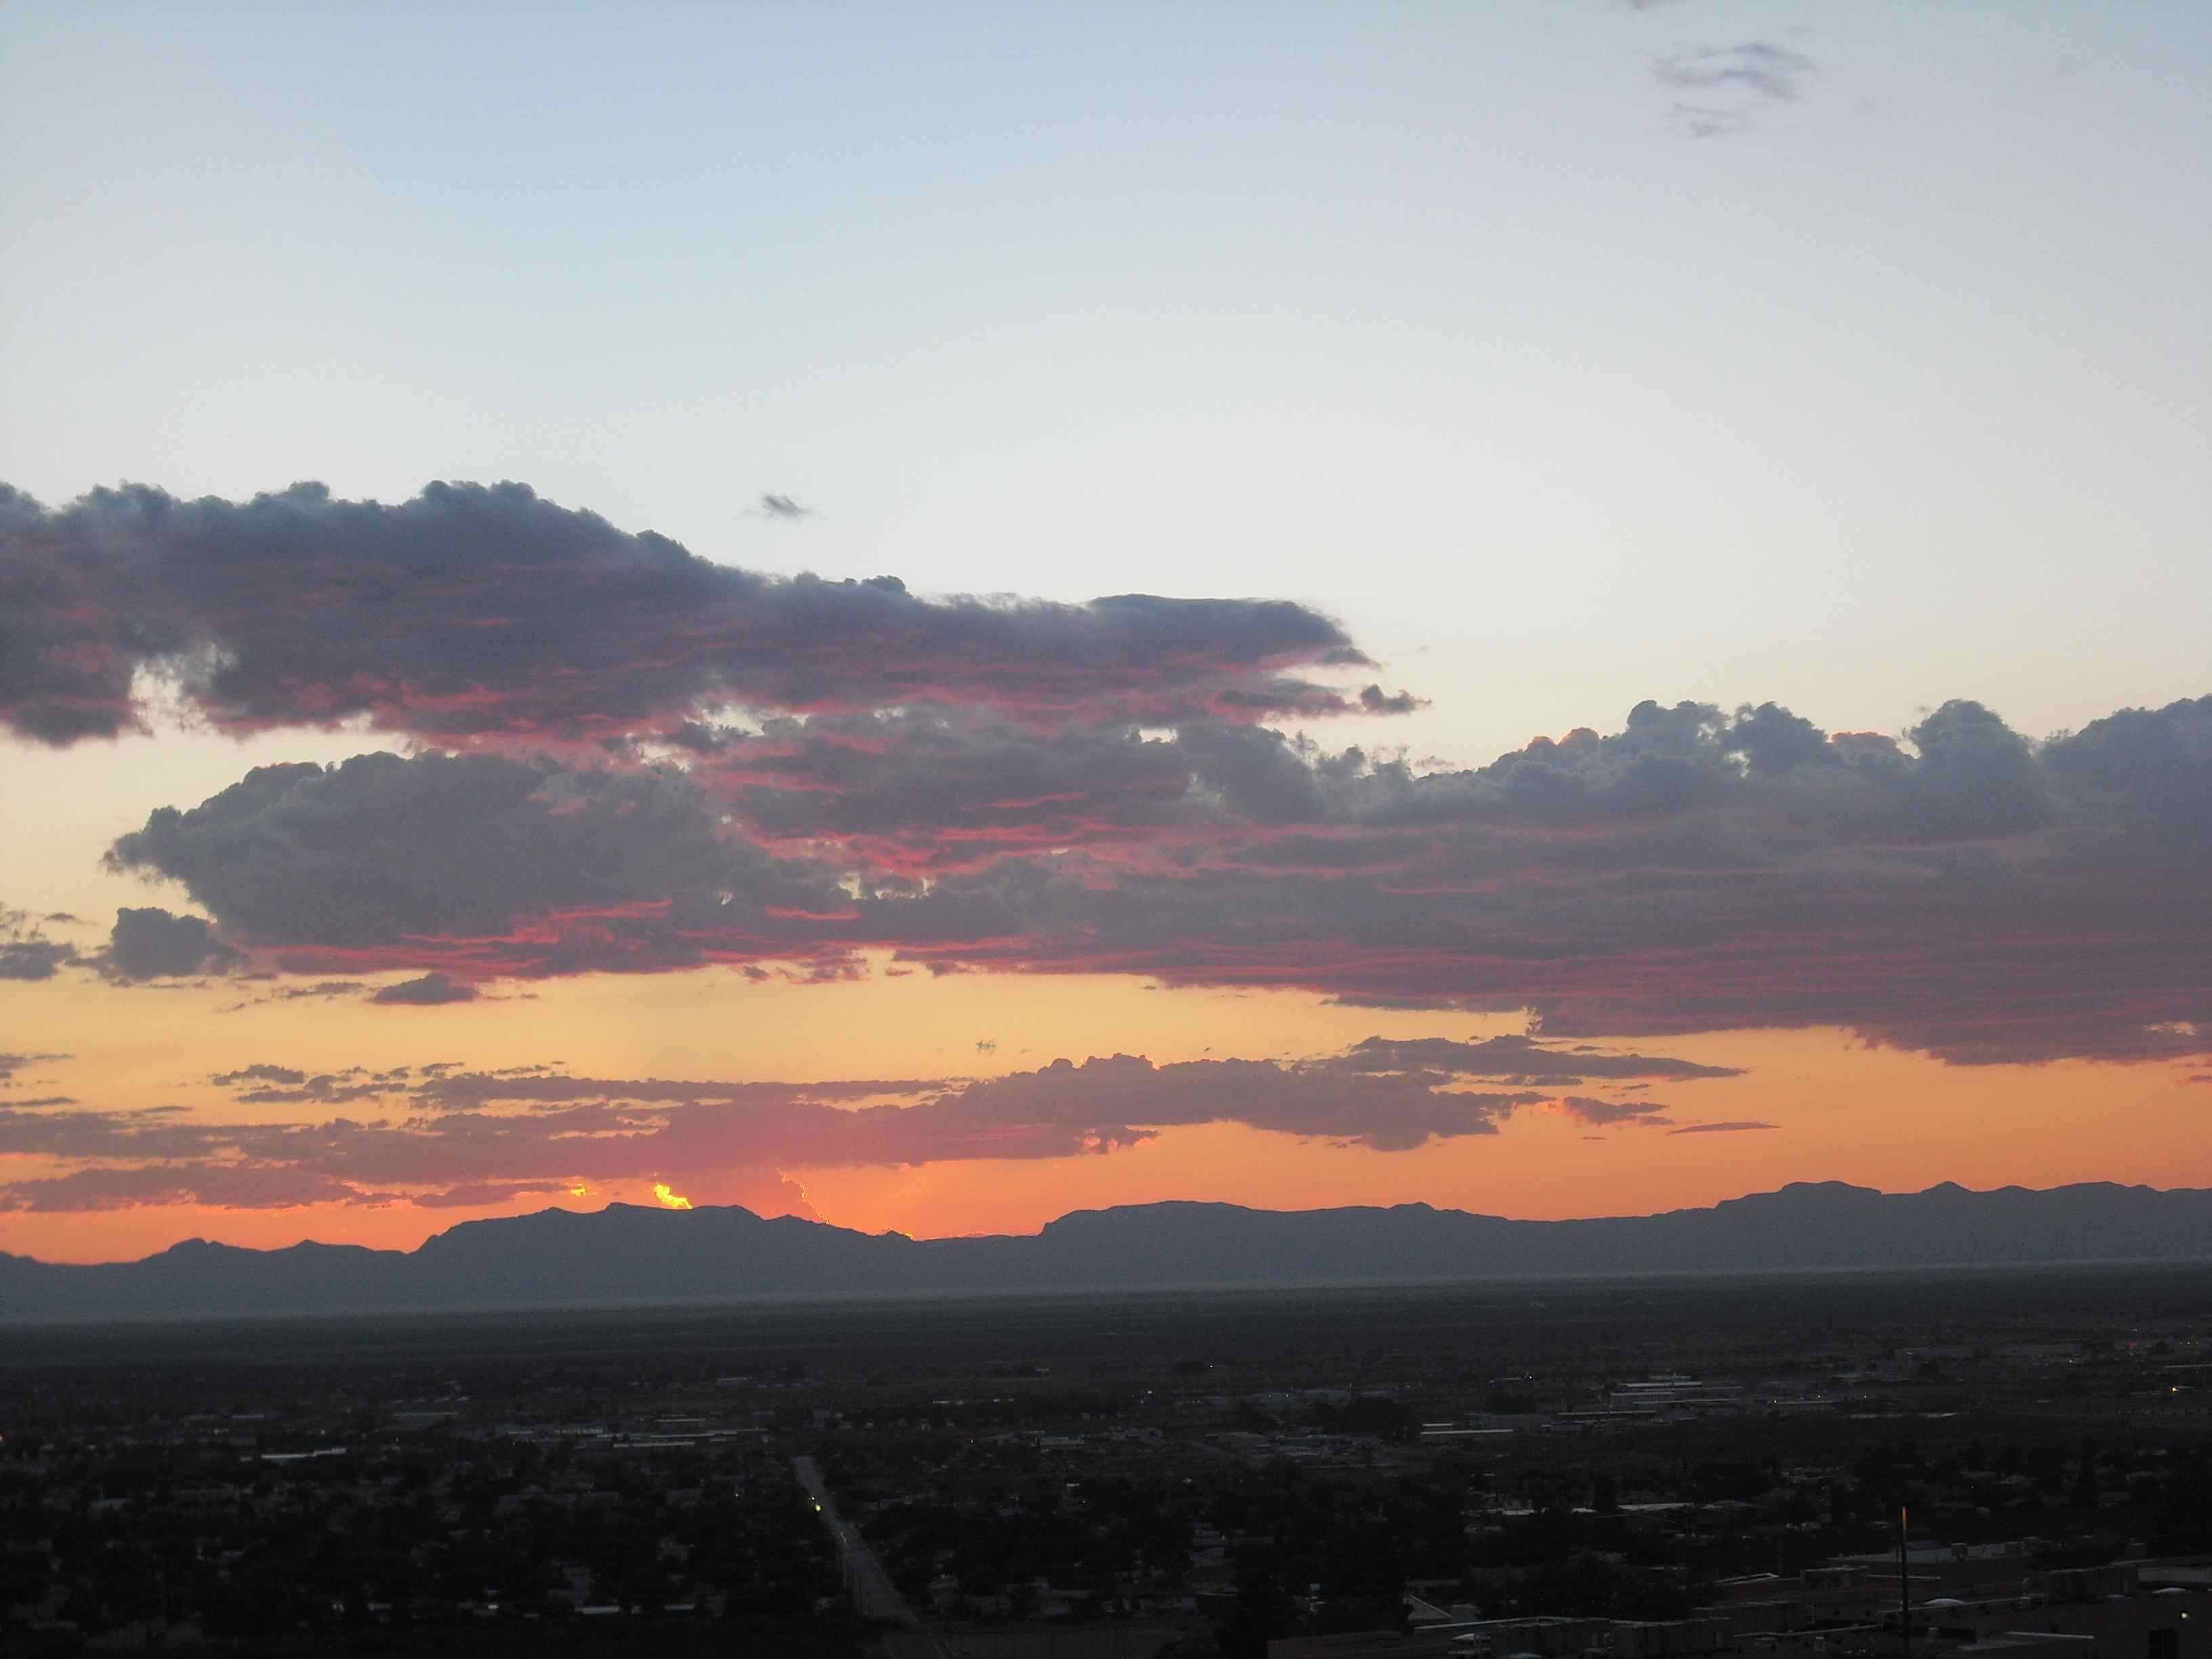 Sunset over Alamogordo, NM